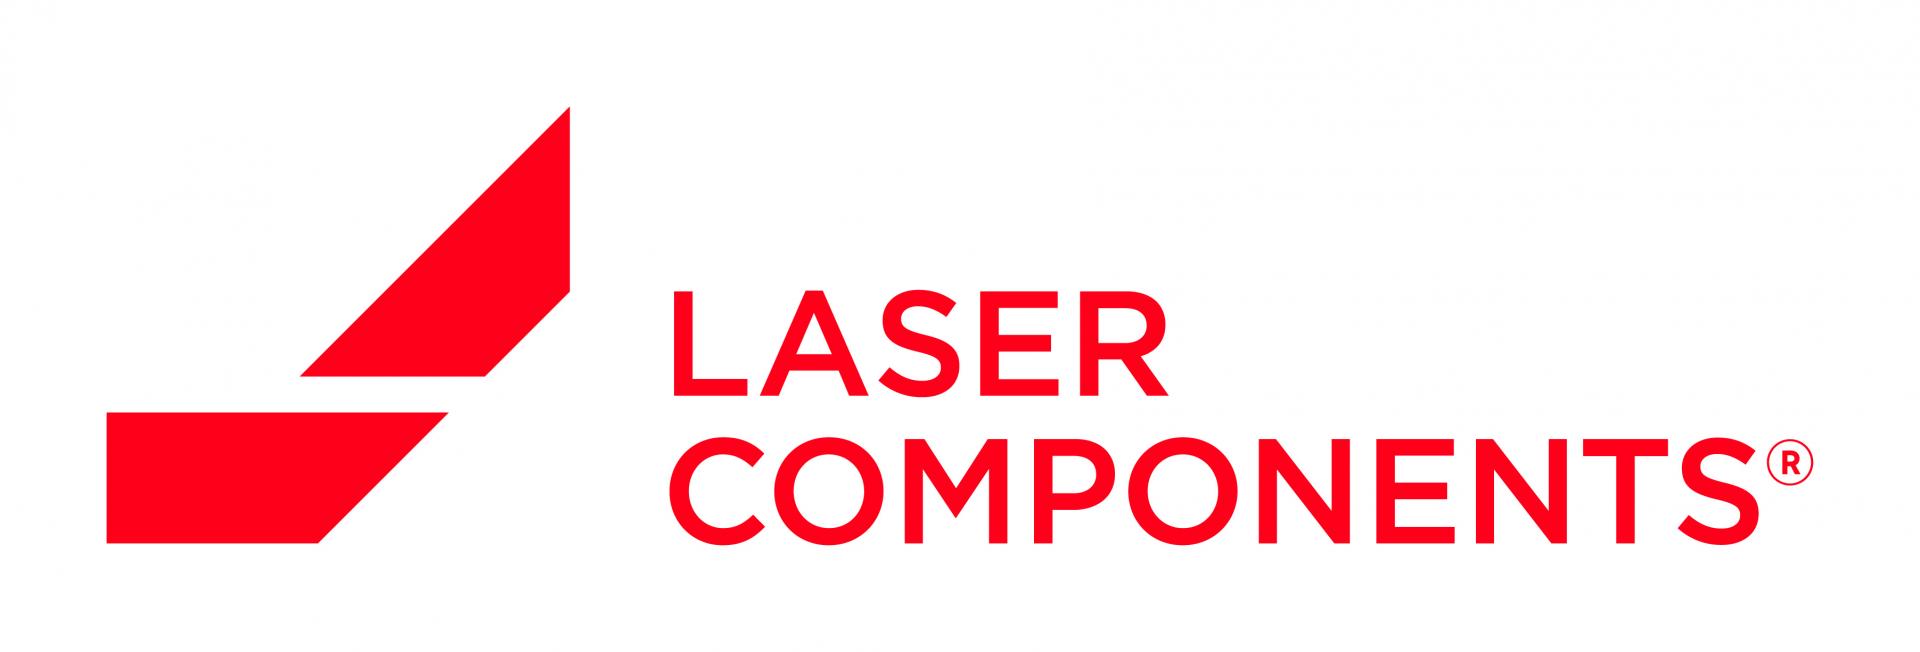 Laser components org